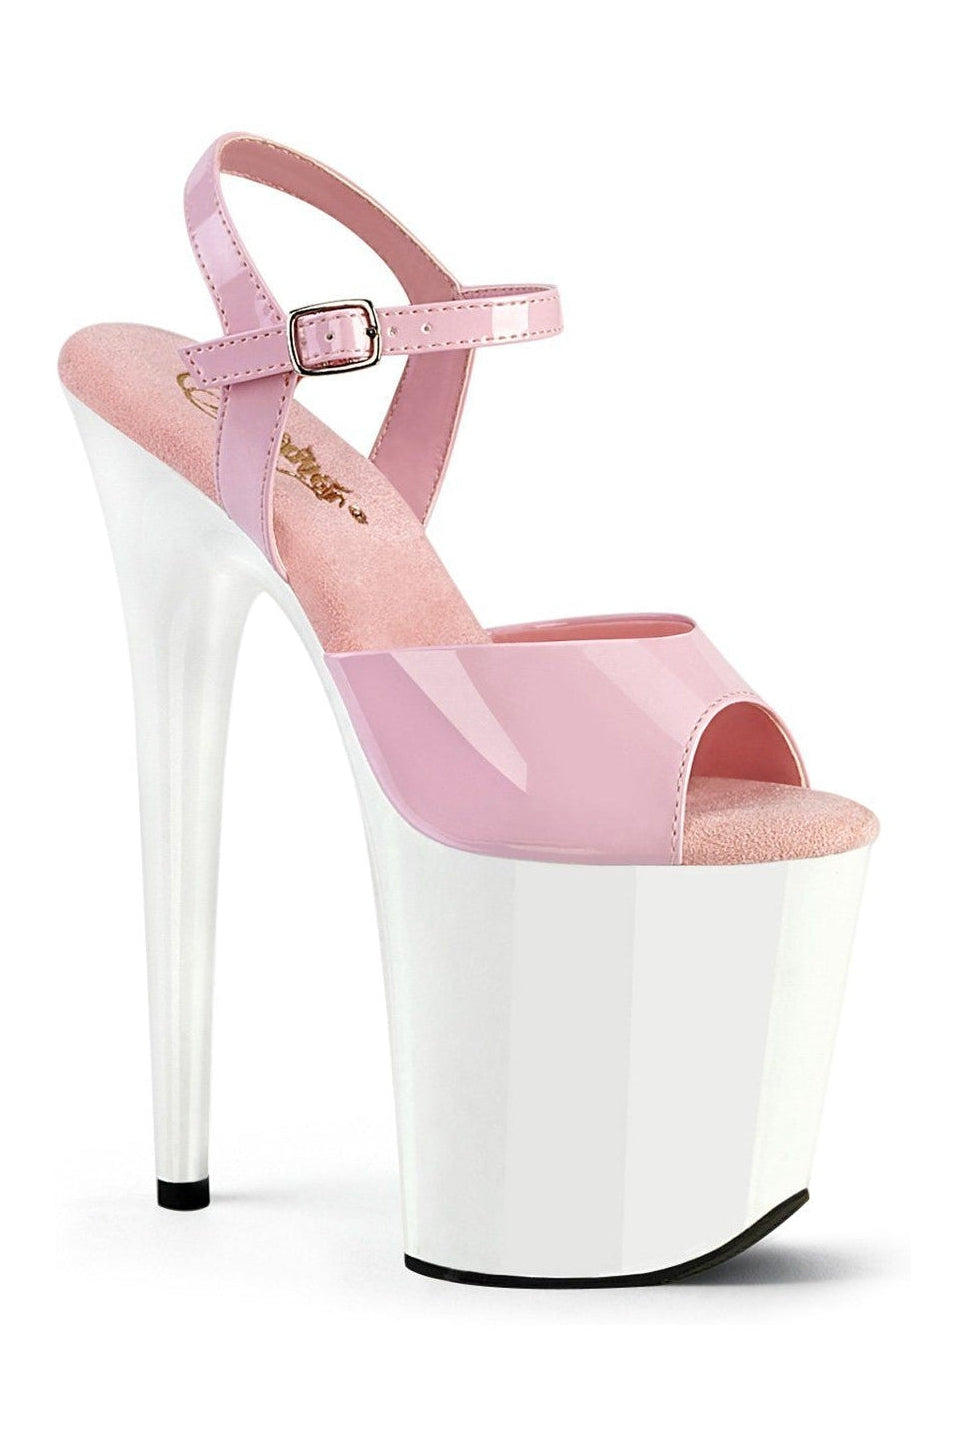 FLAMINGO-809 Sandal | Pink Patent-Sandals-Pleaser-Pink-7-Patent-SEXYSHOES.COM